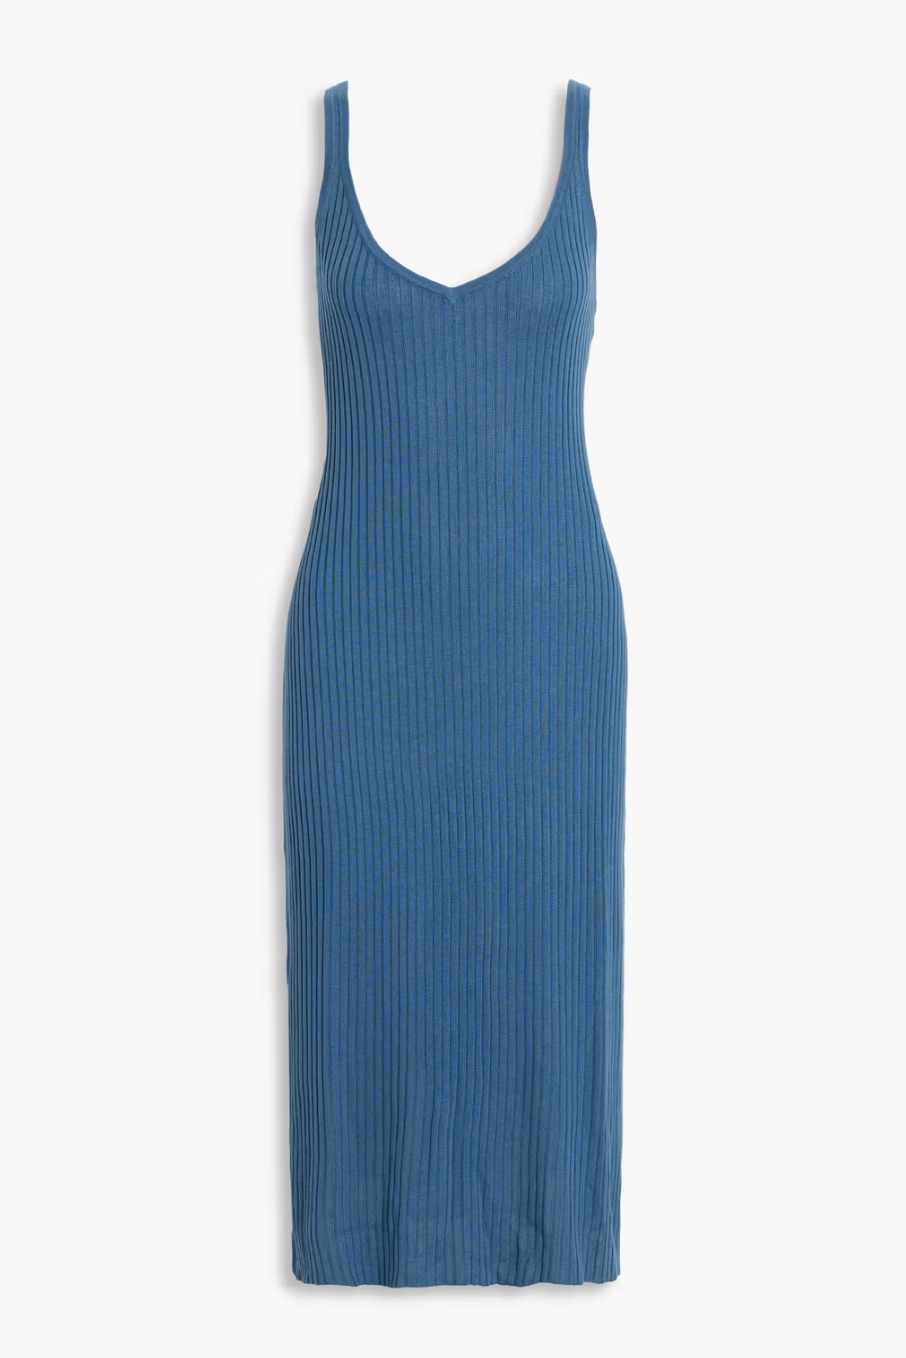 Marled Rib Tank Dress - Stone Blue